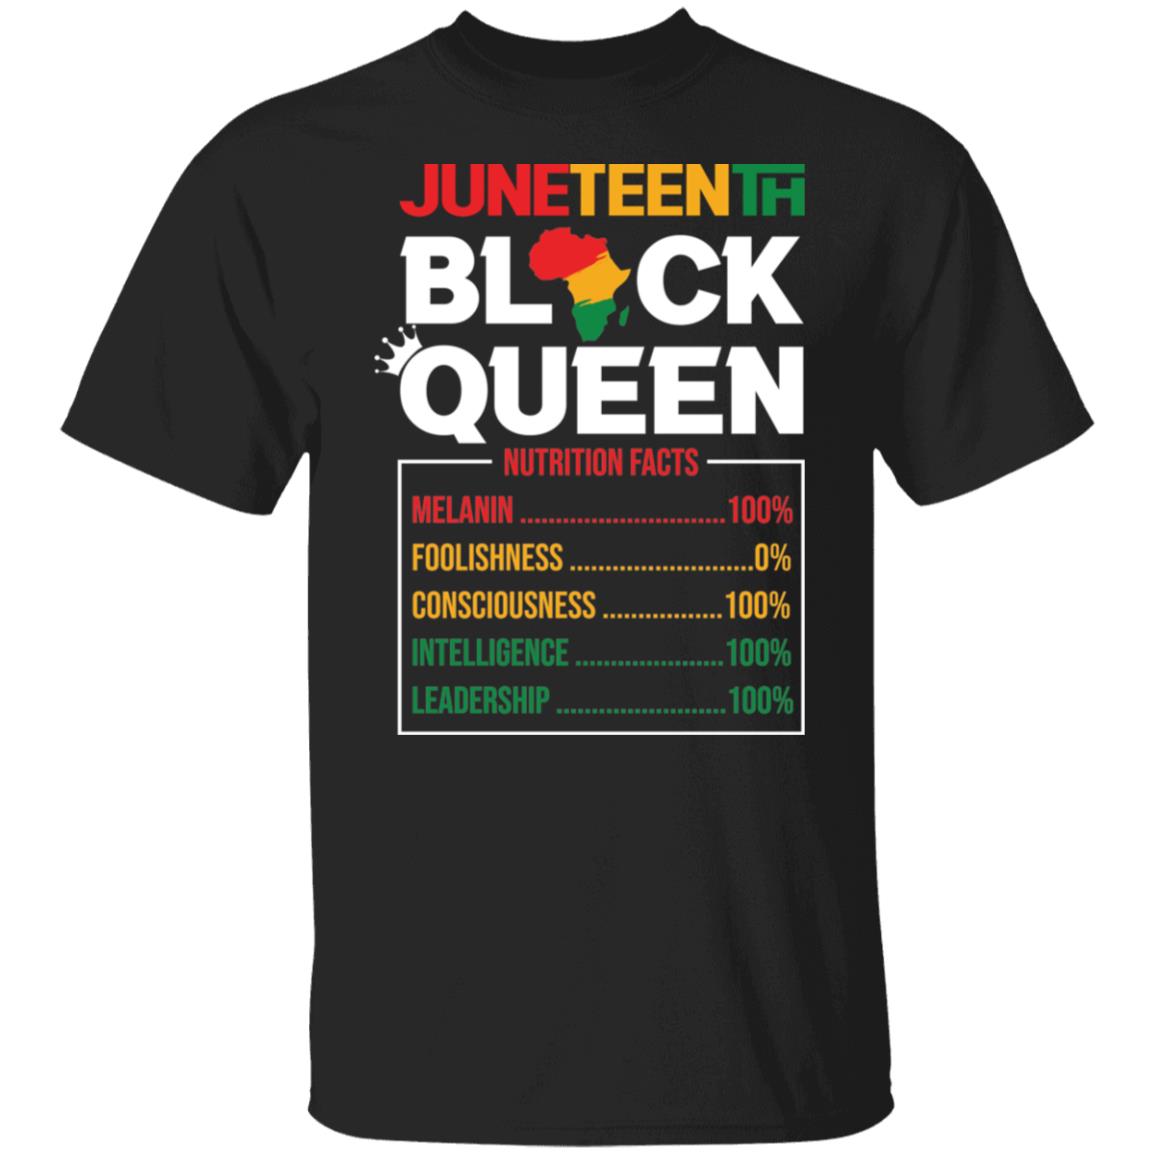 Juneteenth Black Queen Nutrition Facts T-shirt Apparel Gearment Unisex Tee Black S